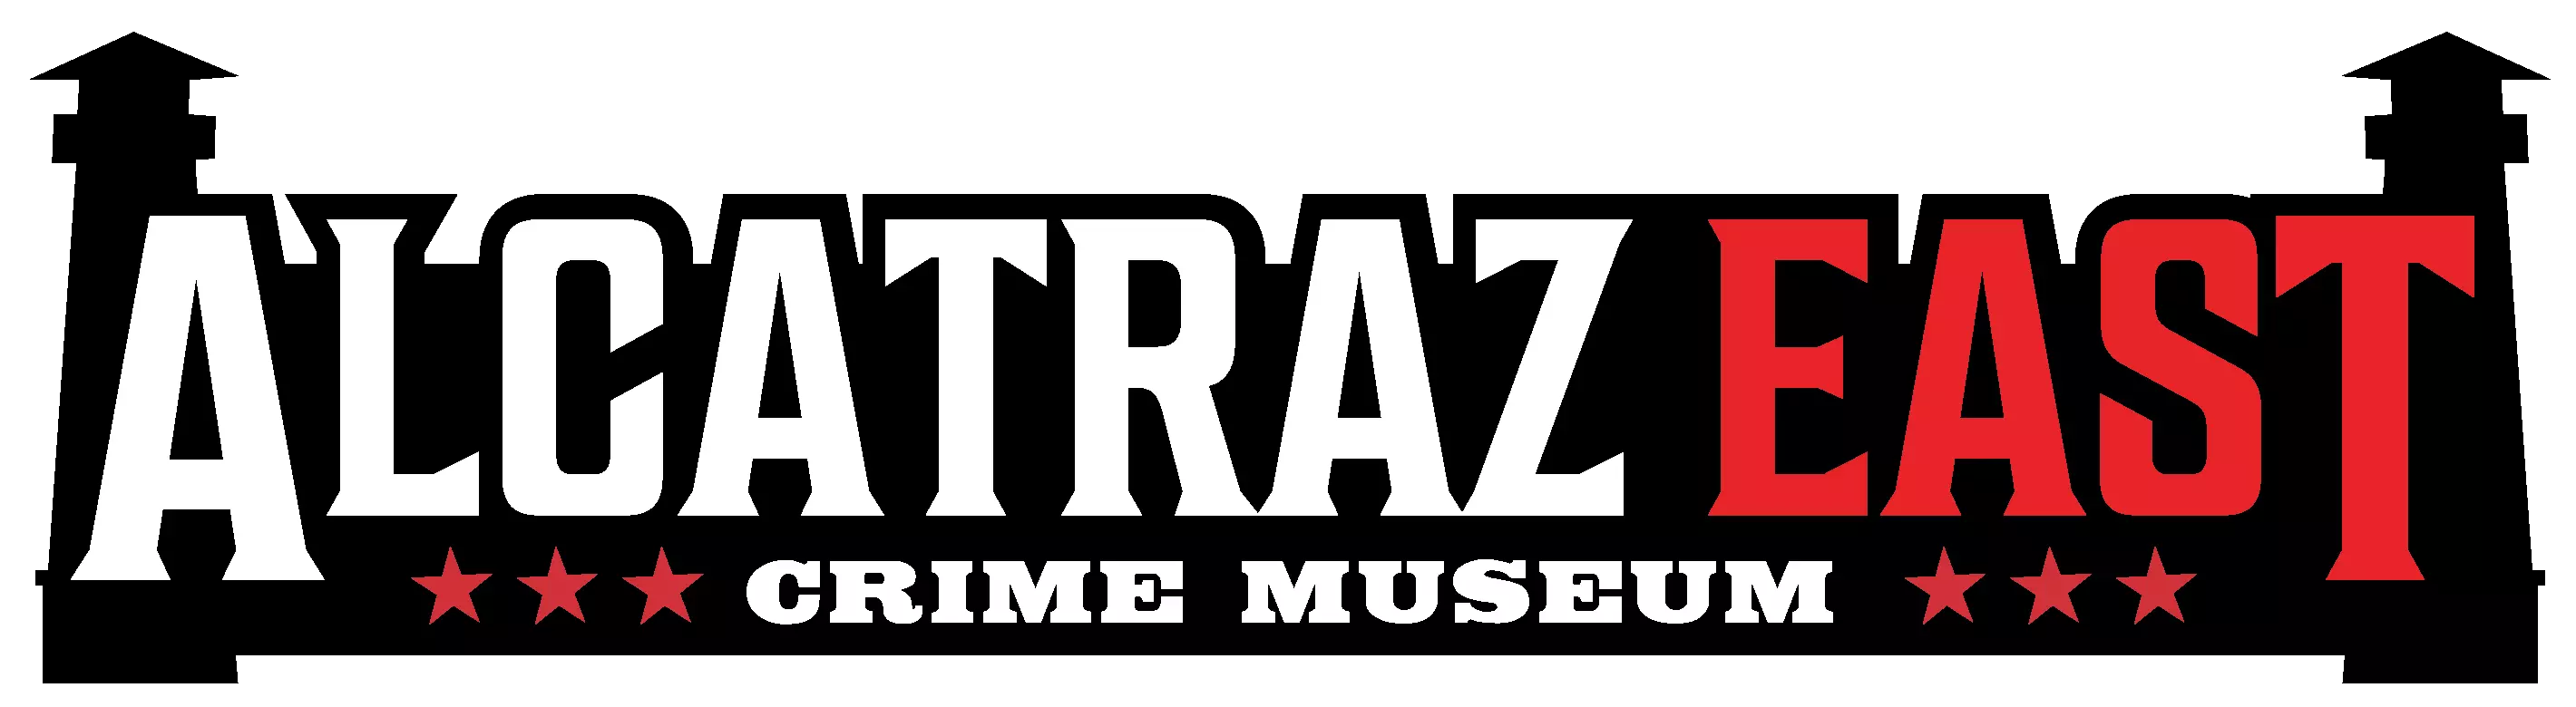 alcatraz east museum logo